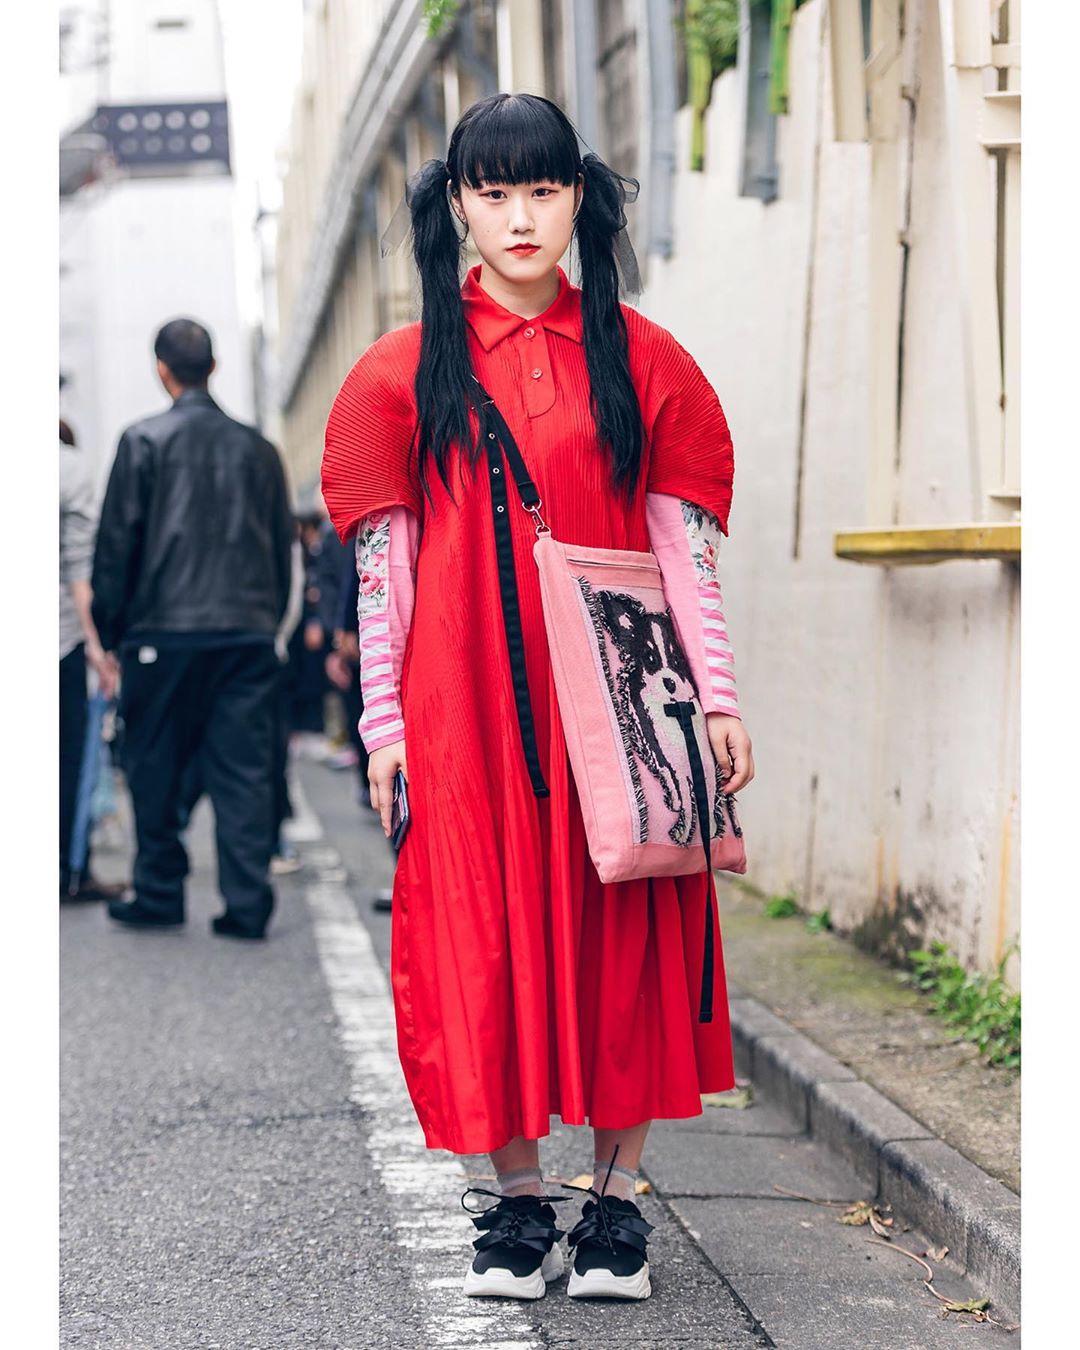 Tokyo Fashion: Street snaps taken outside of the Tokyo Fashion Week ...